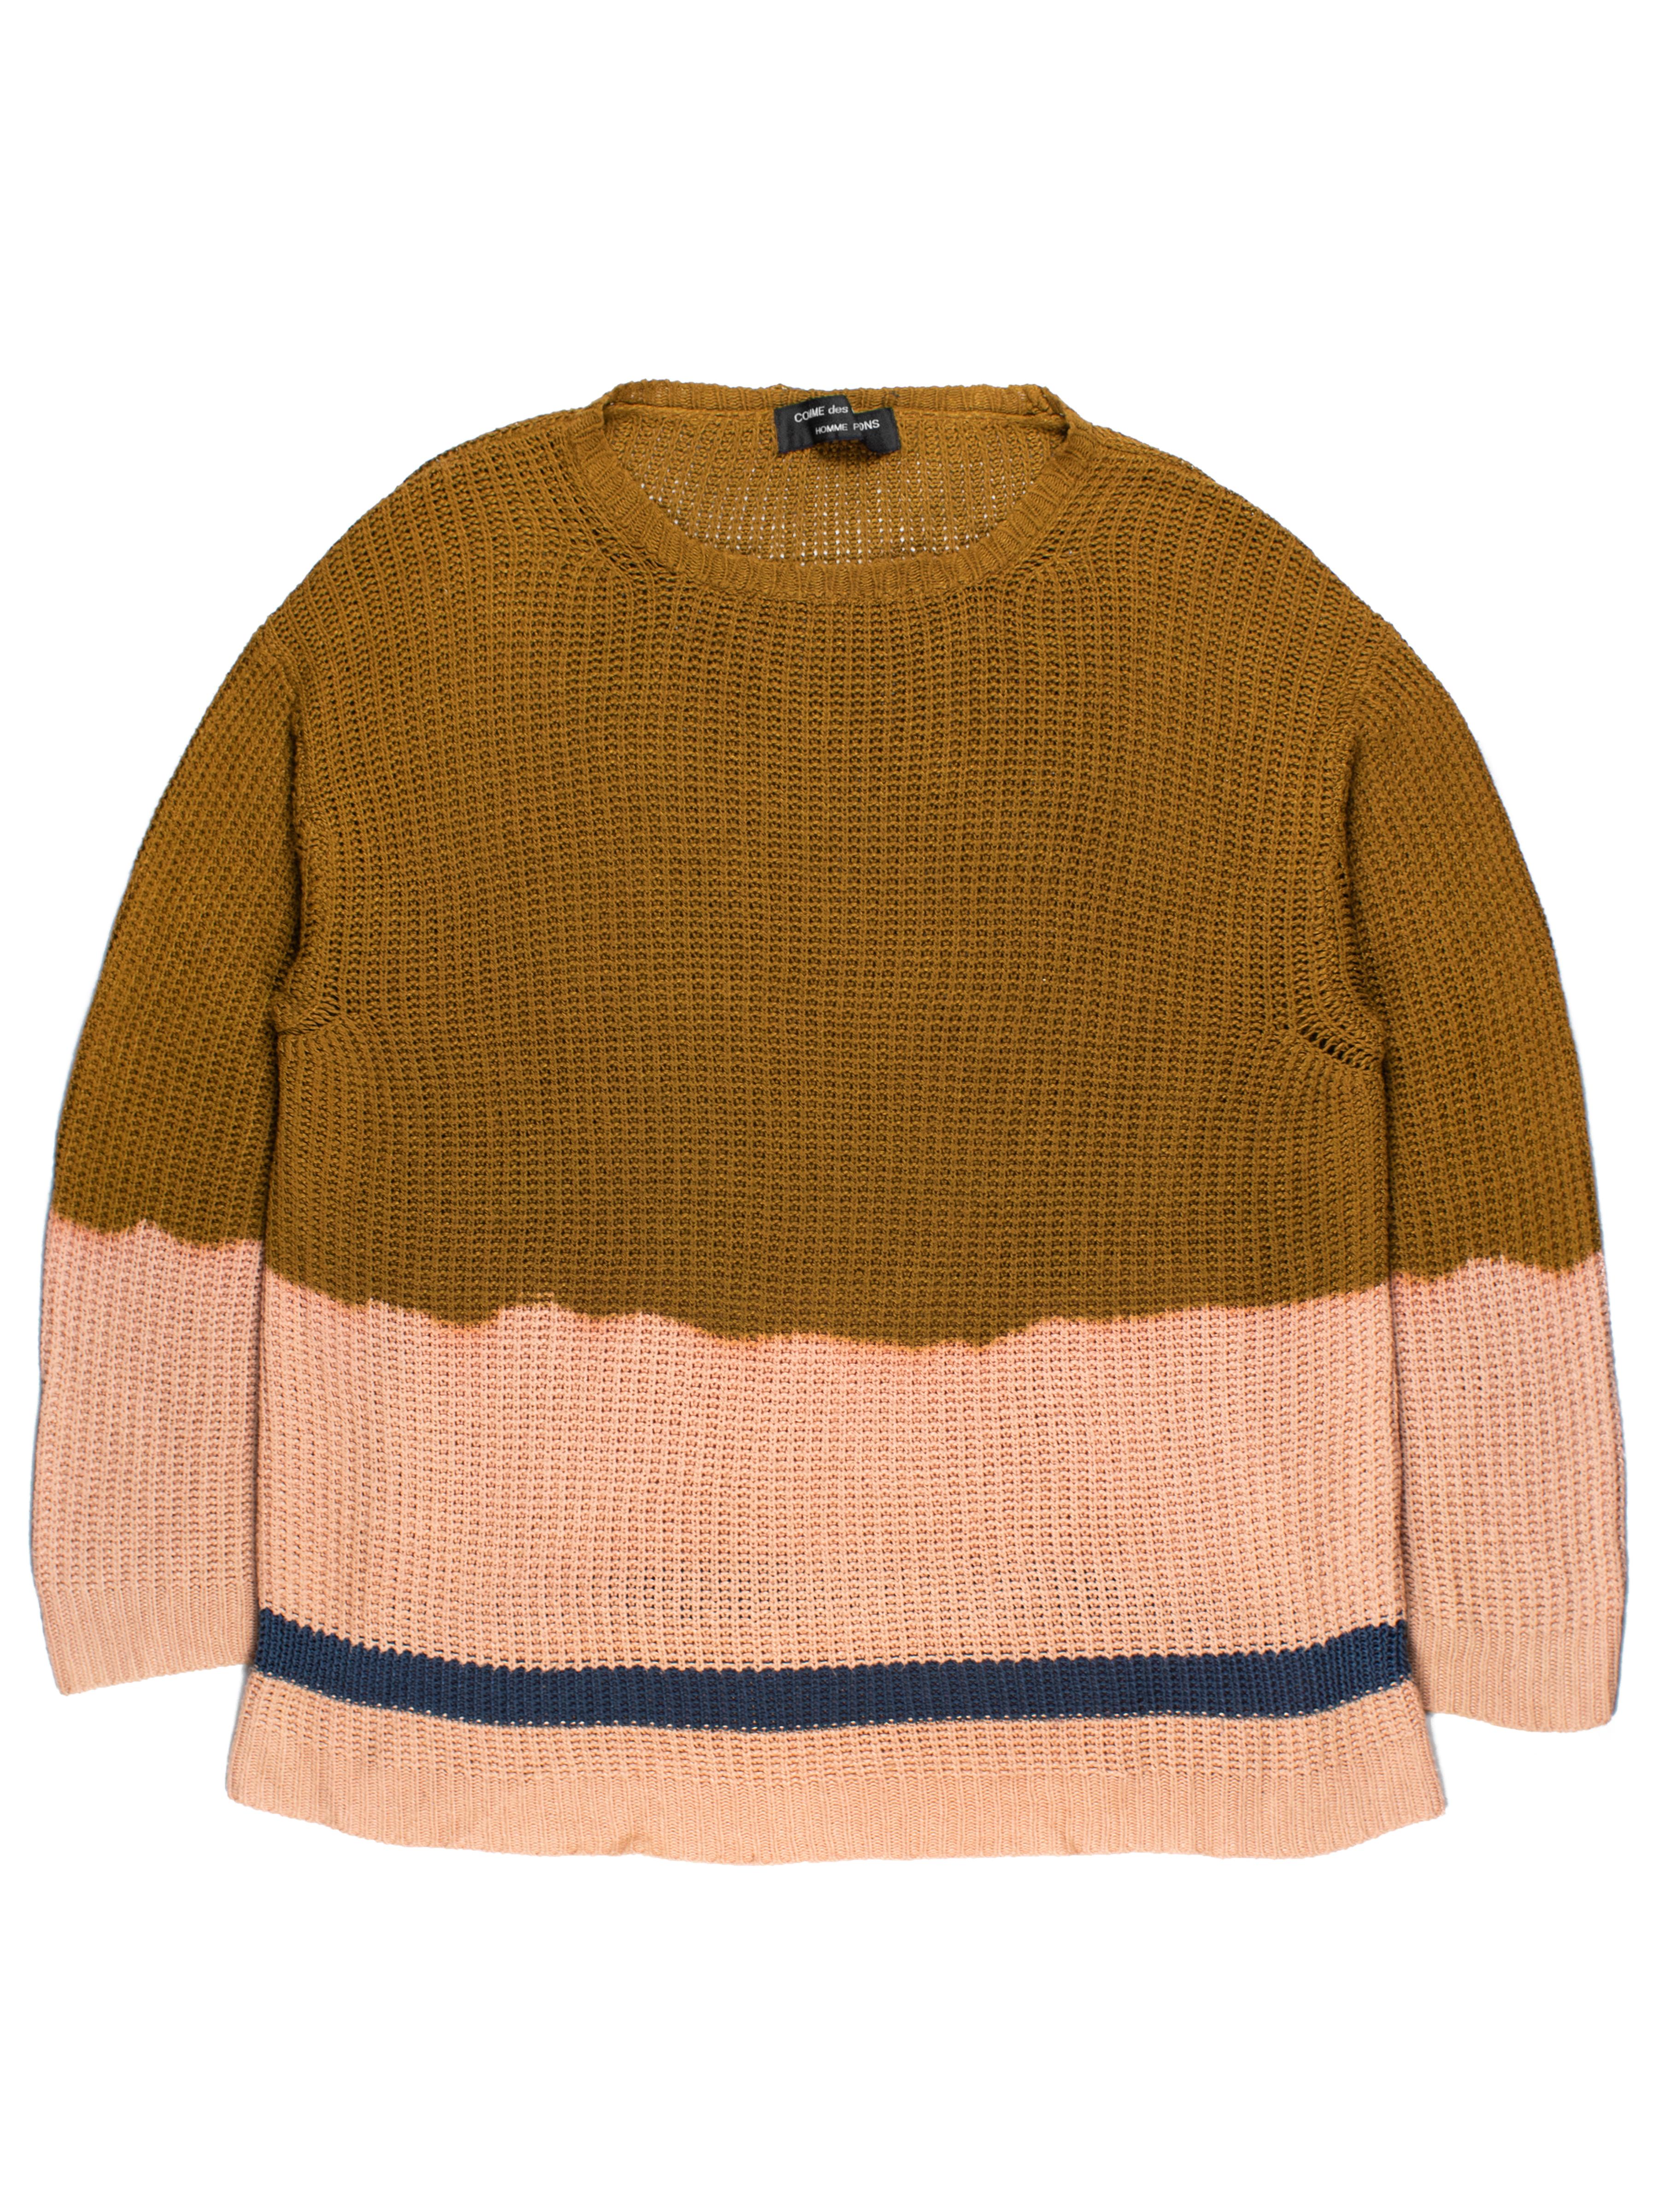 Comme des Garçons Homme Plus AW1993 Bleach-Dyed Sweater